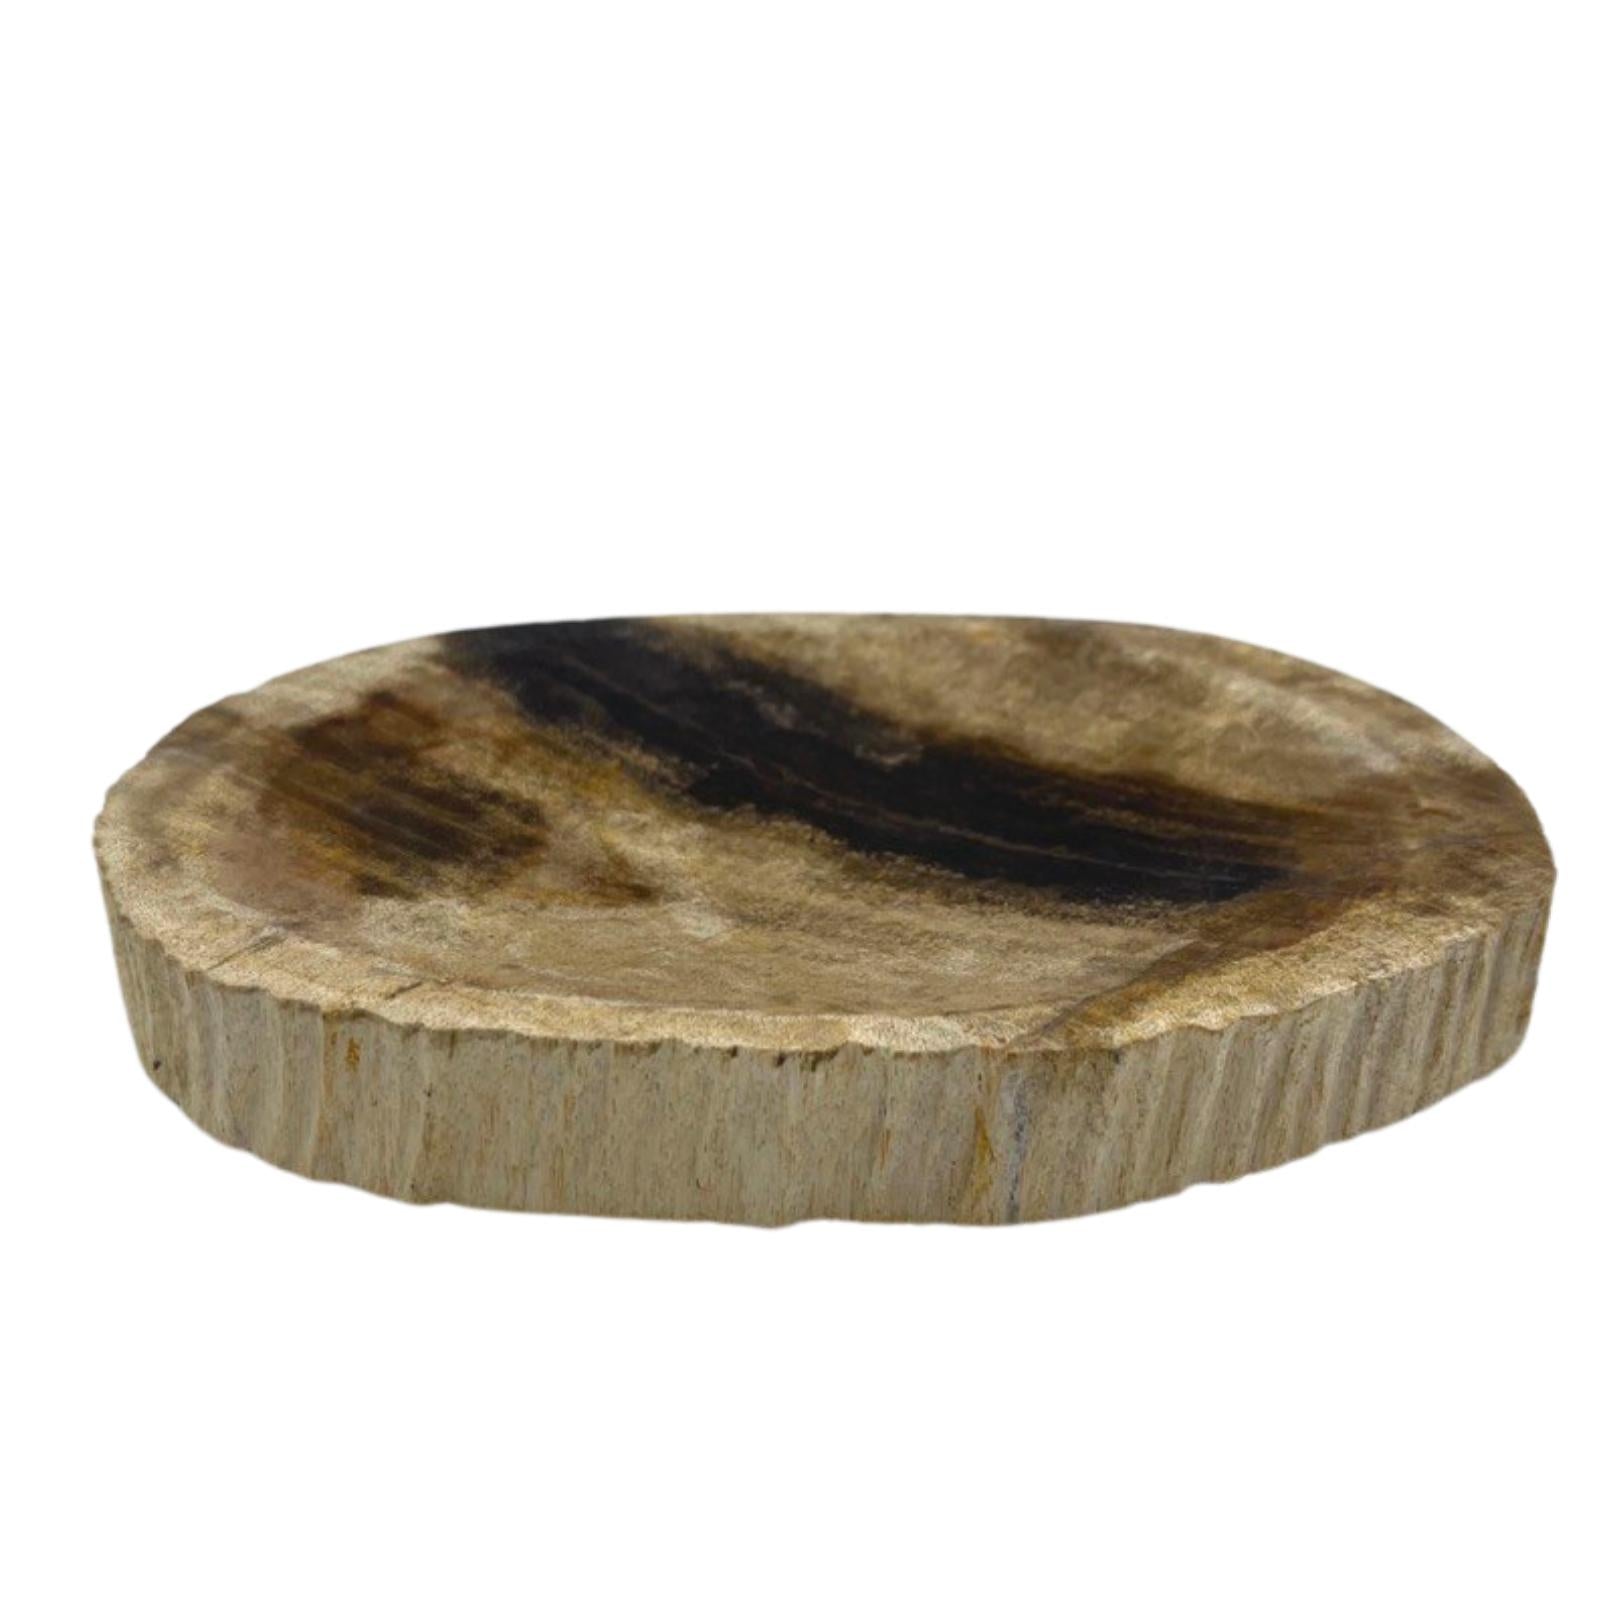 Petrified Wood Black Soap Dish - £39.0 - 